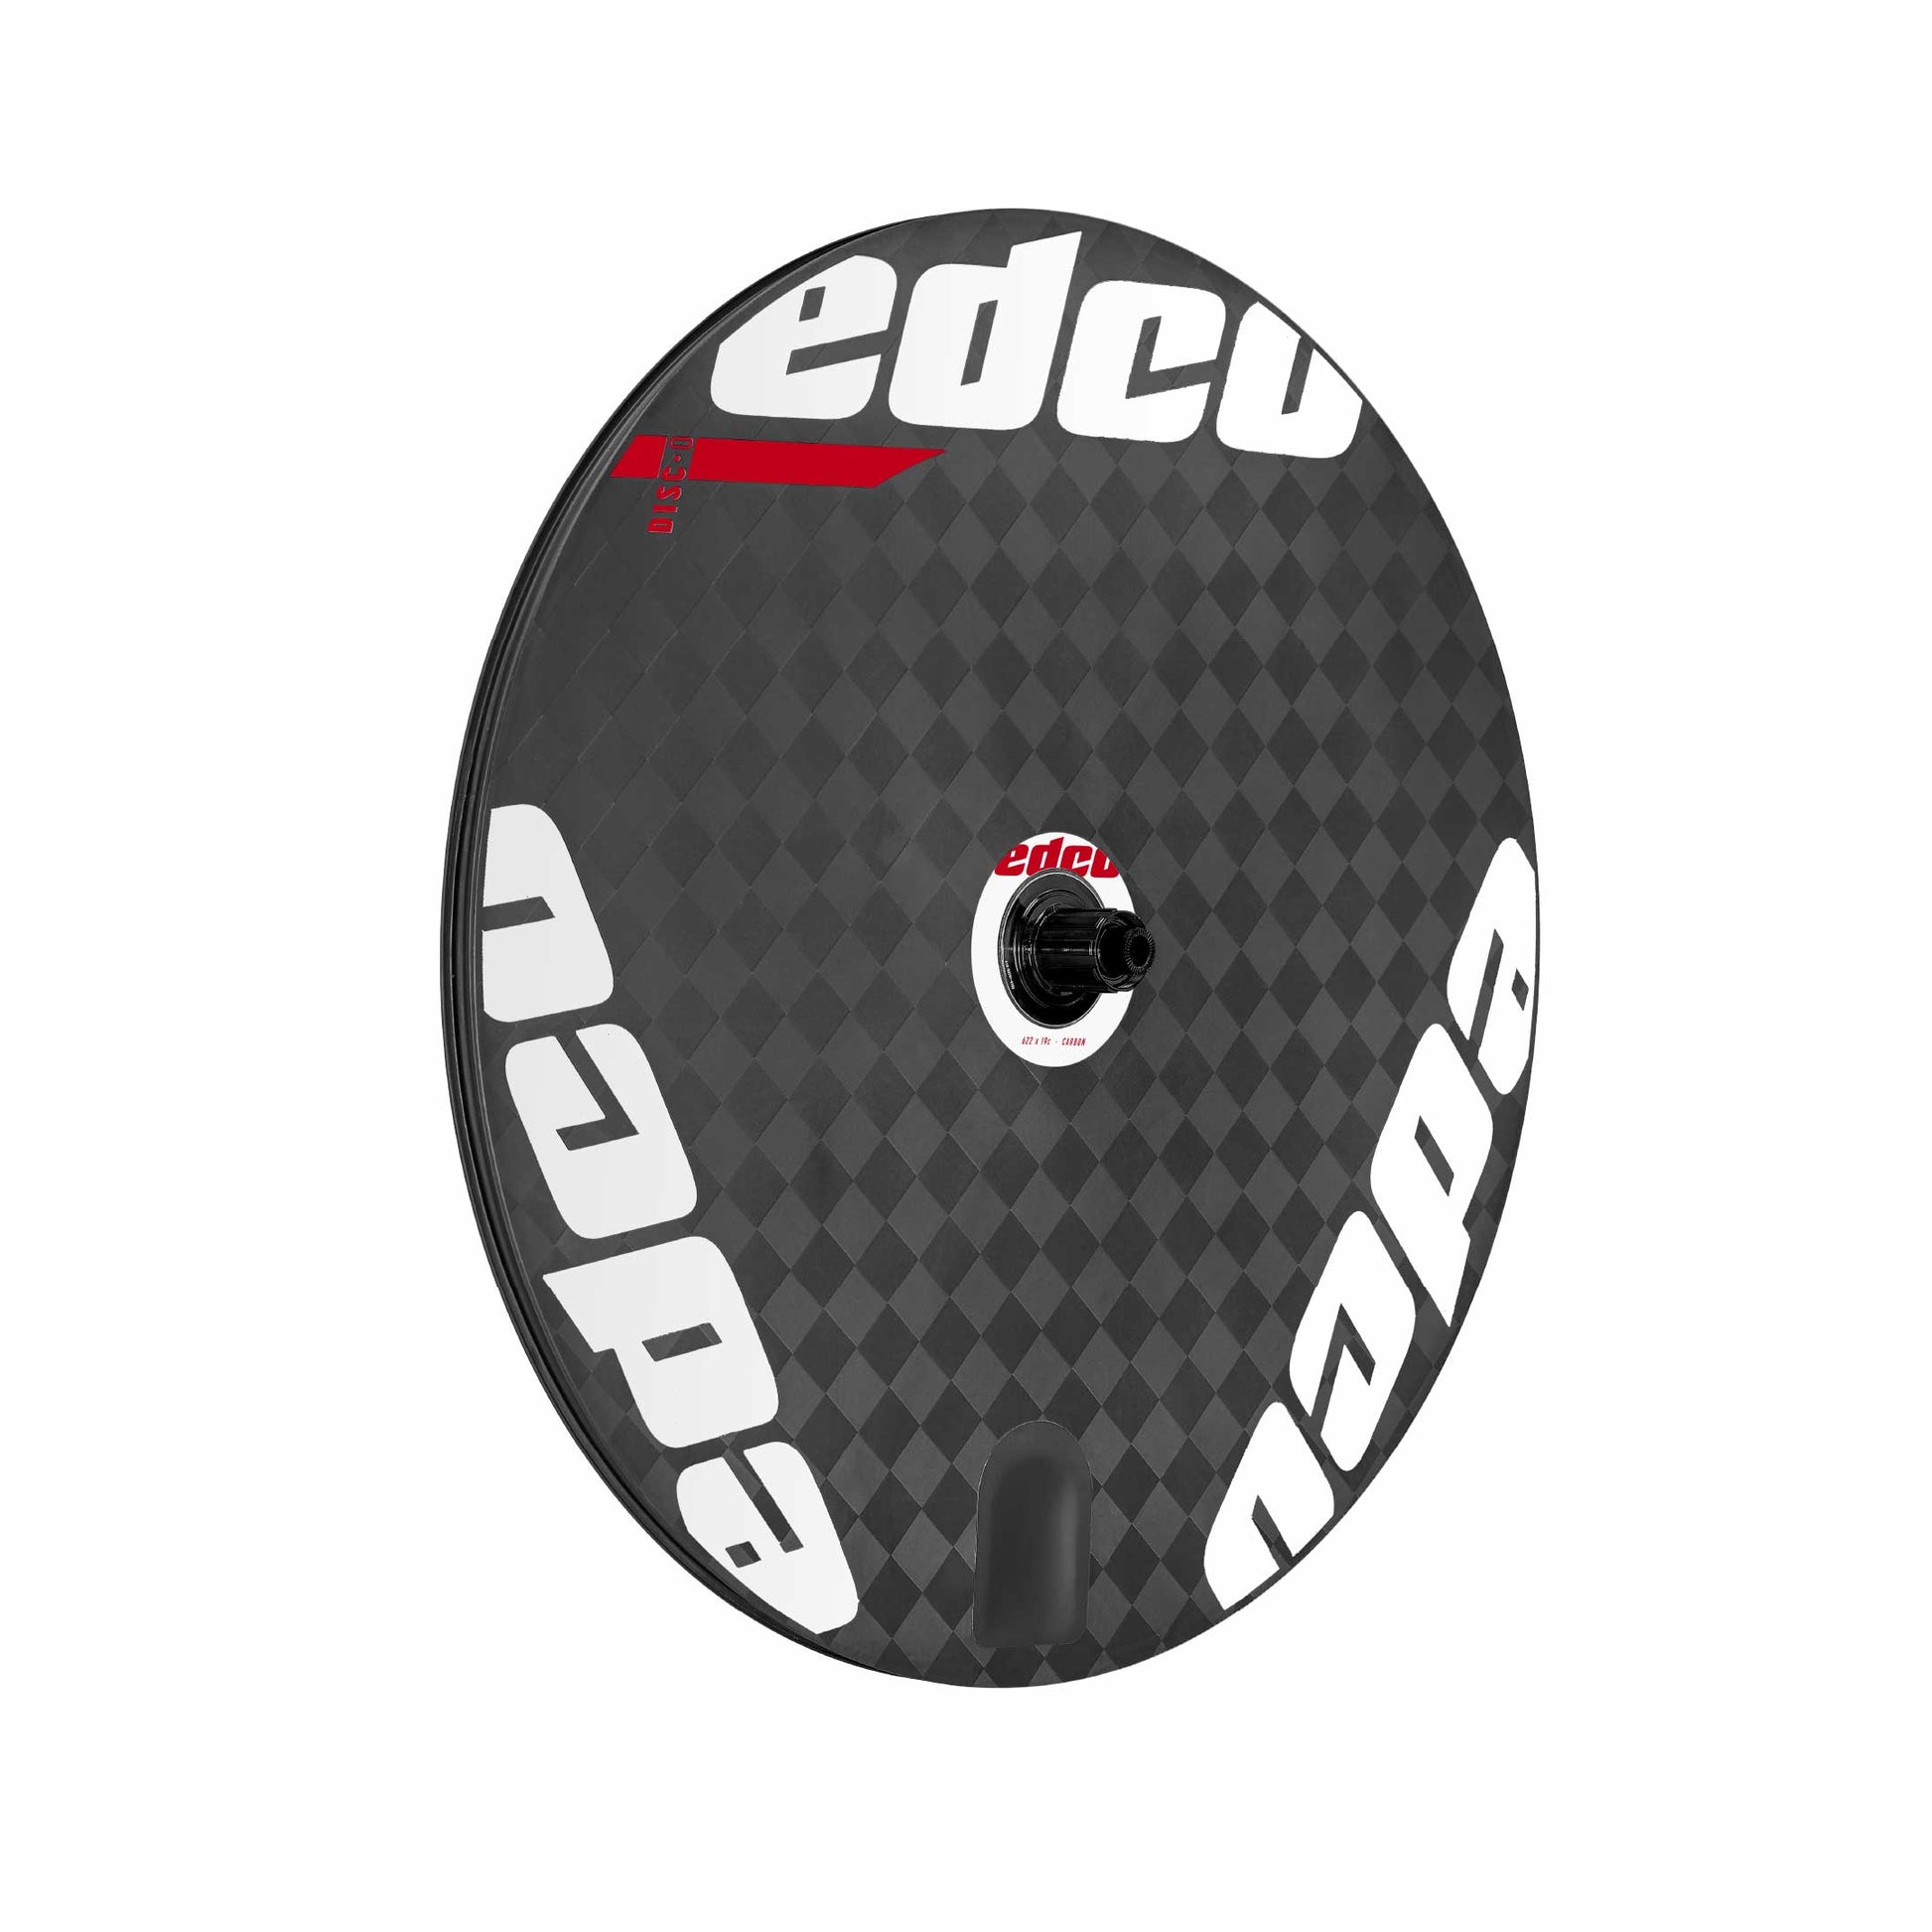 Full disc rear wheel, disc brake, triathlon or timetrail wheel